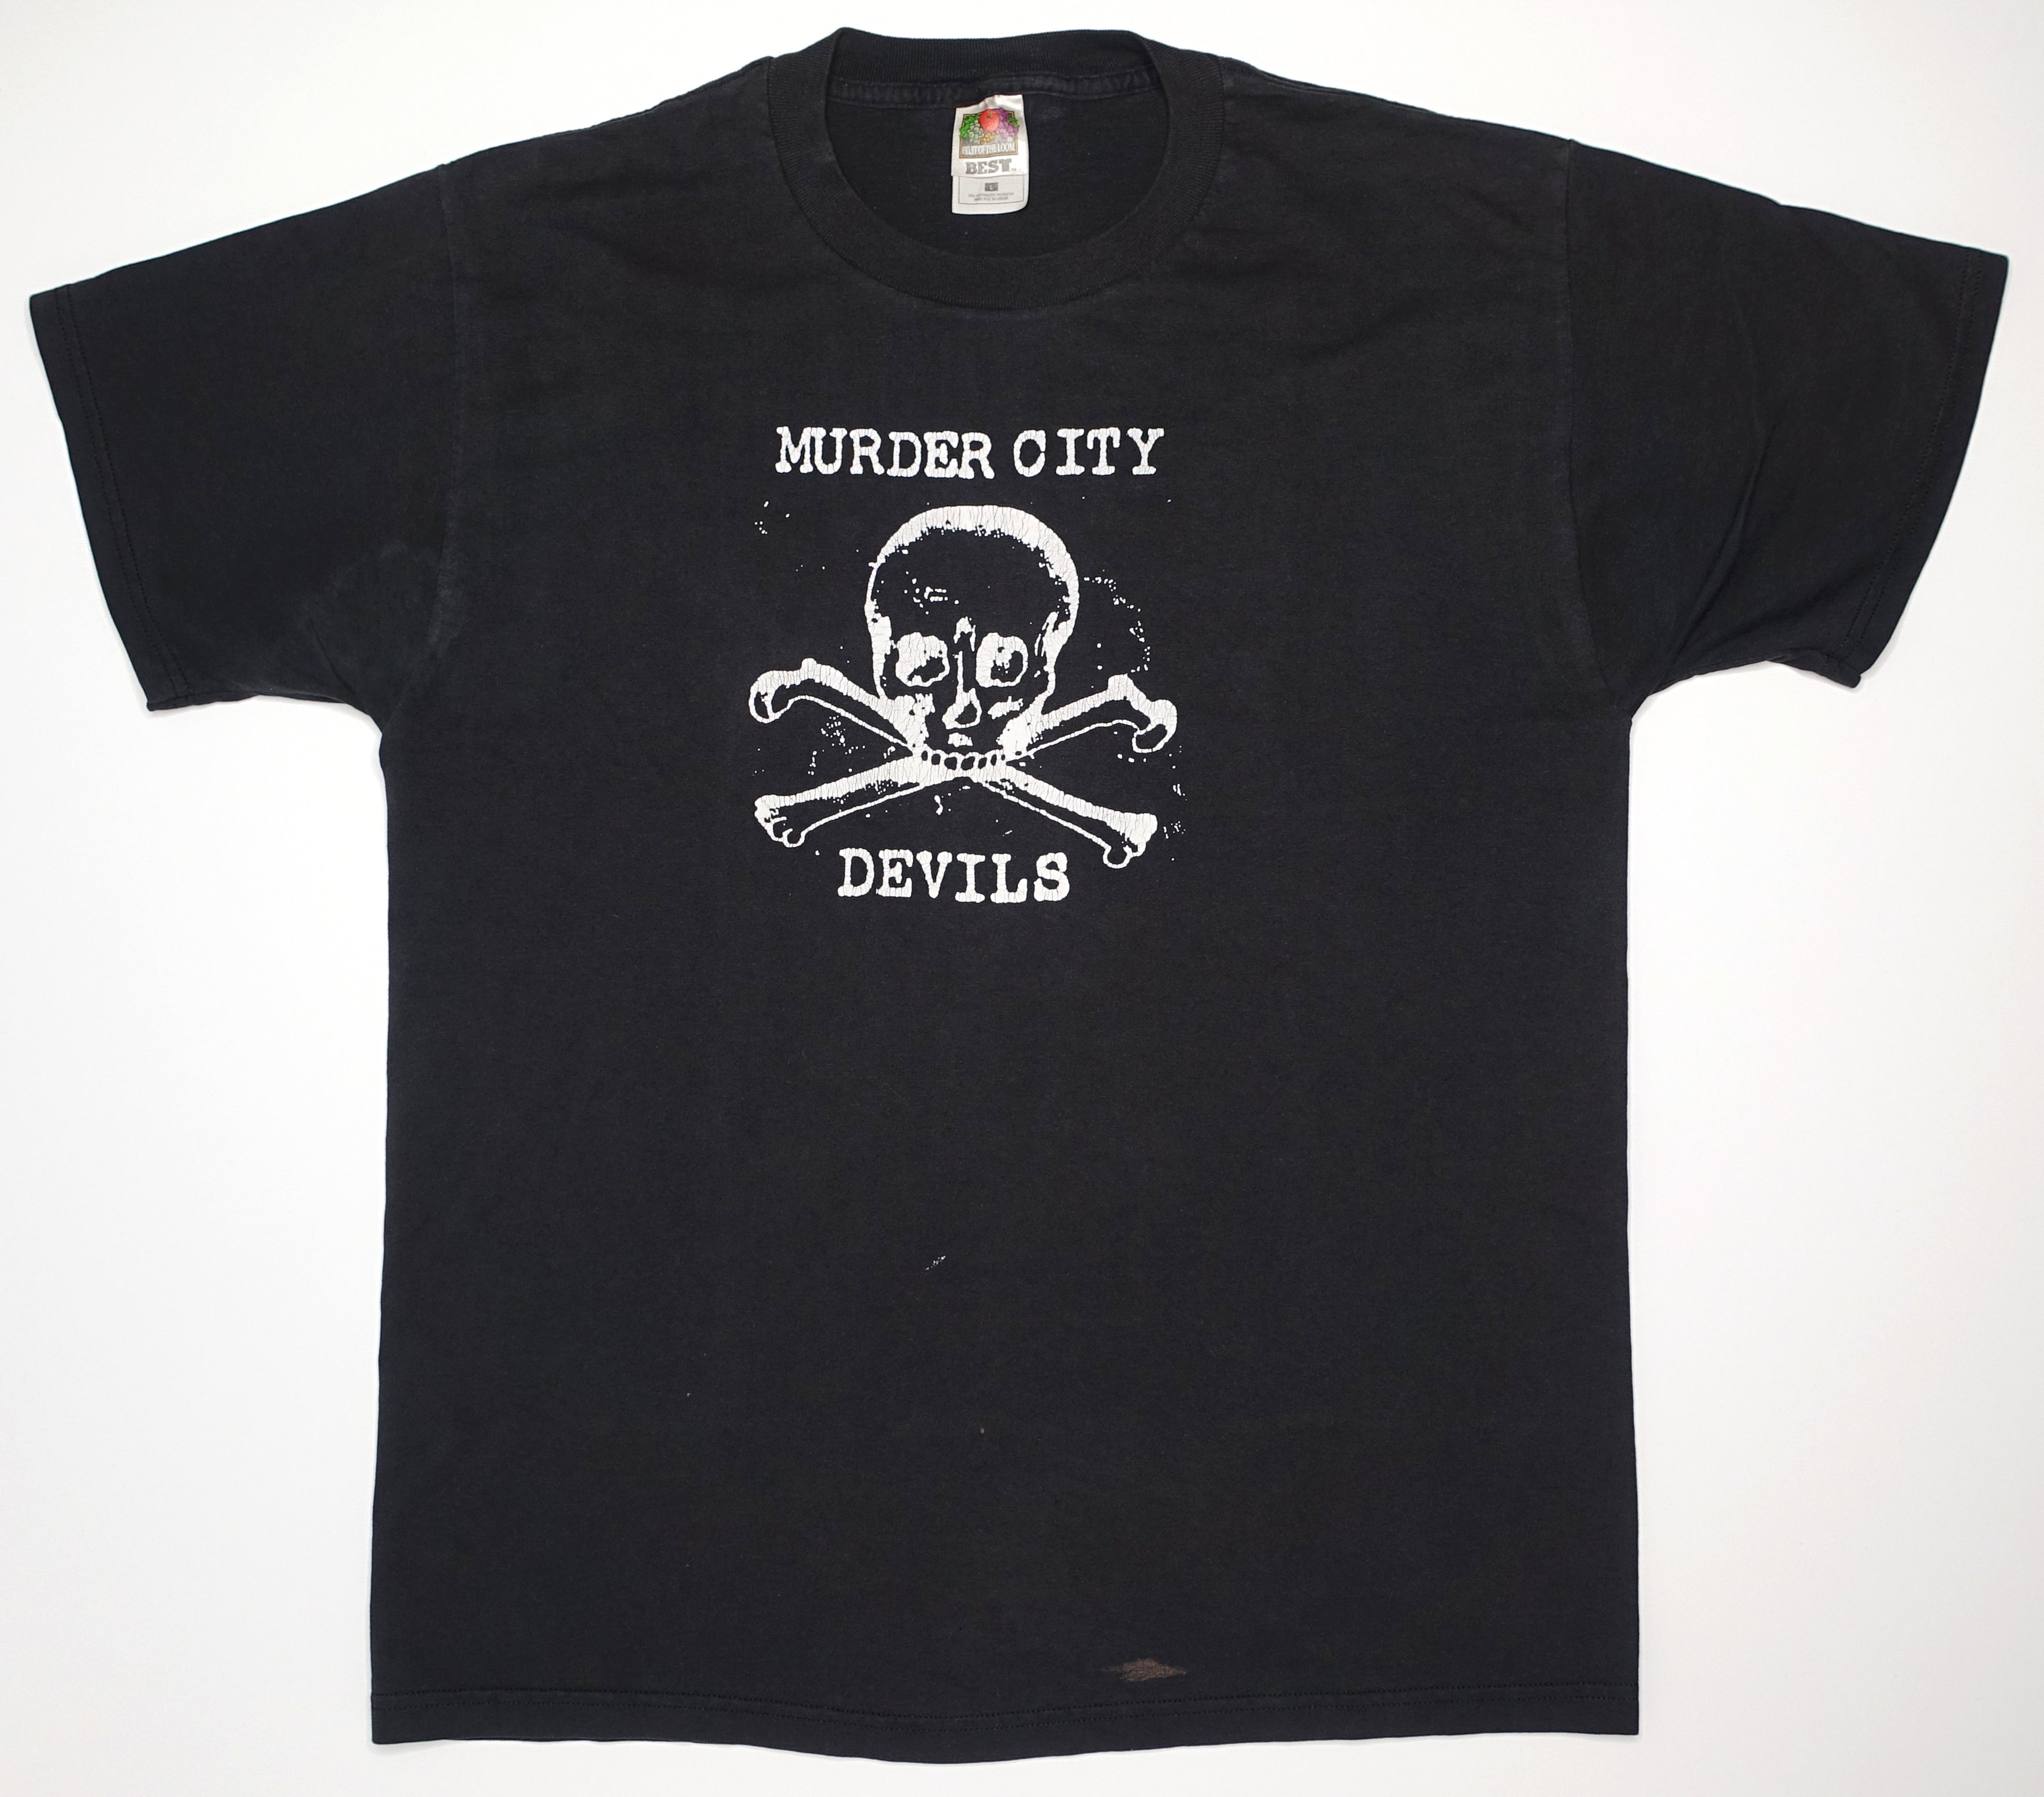 Murder City Devils ‎– Dancehall Music Skull And Cross Bones Black Shirt Size Large